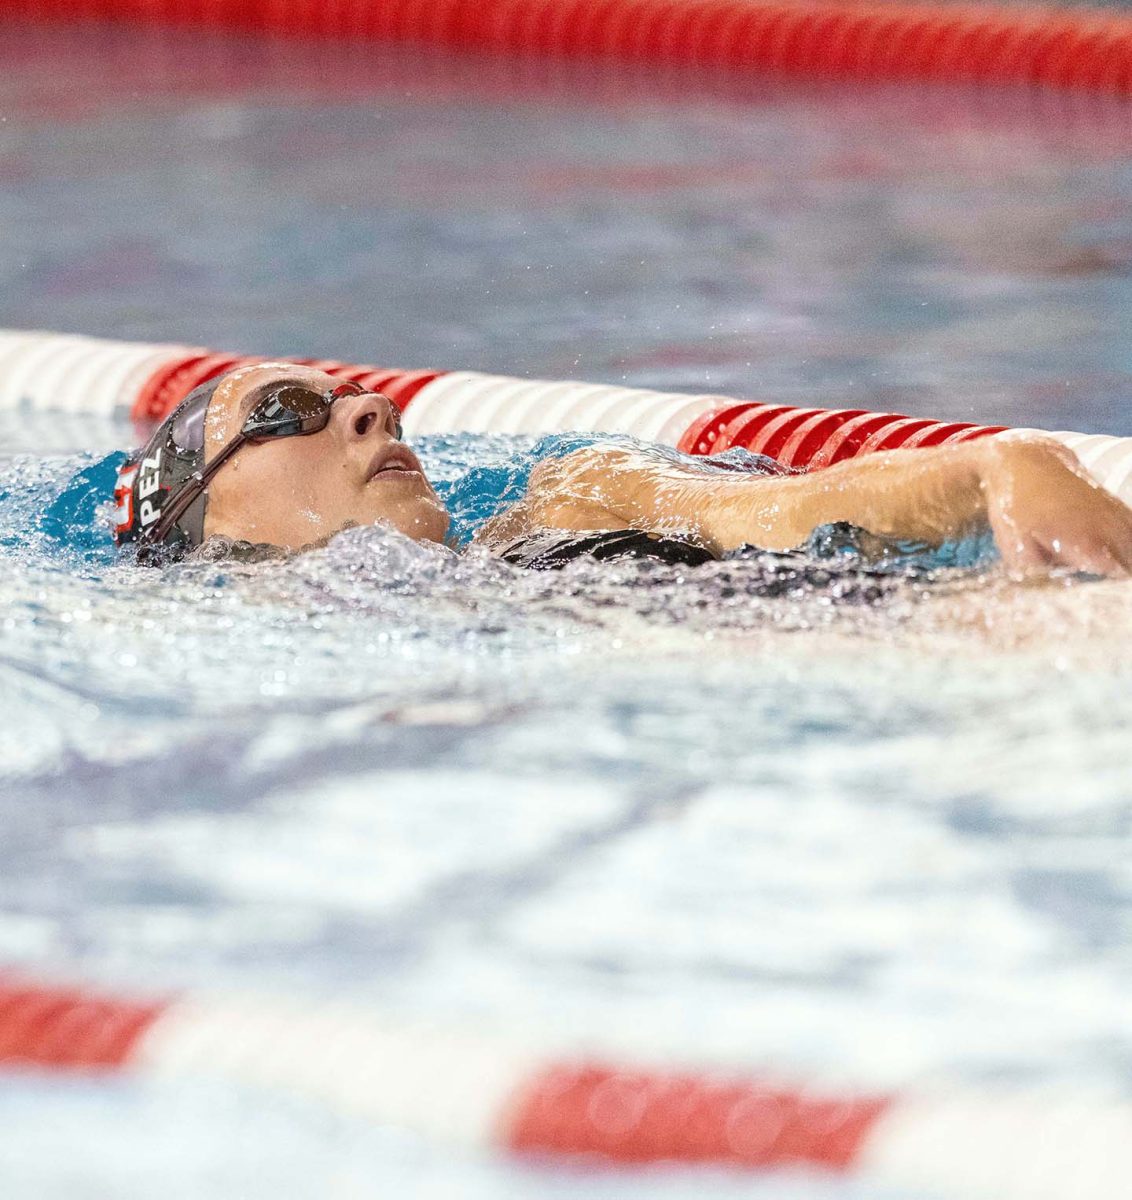 Senior Swimmer Finds Success Through Hard Work, Dedication